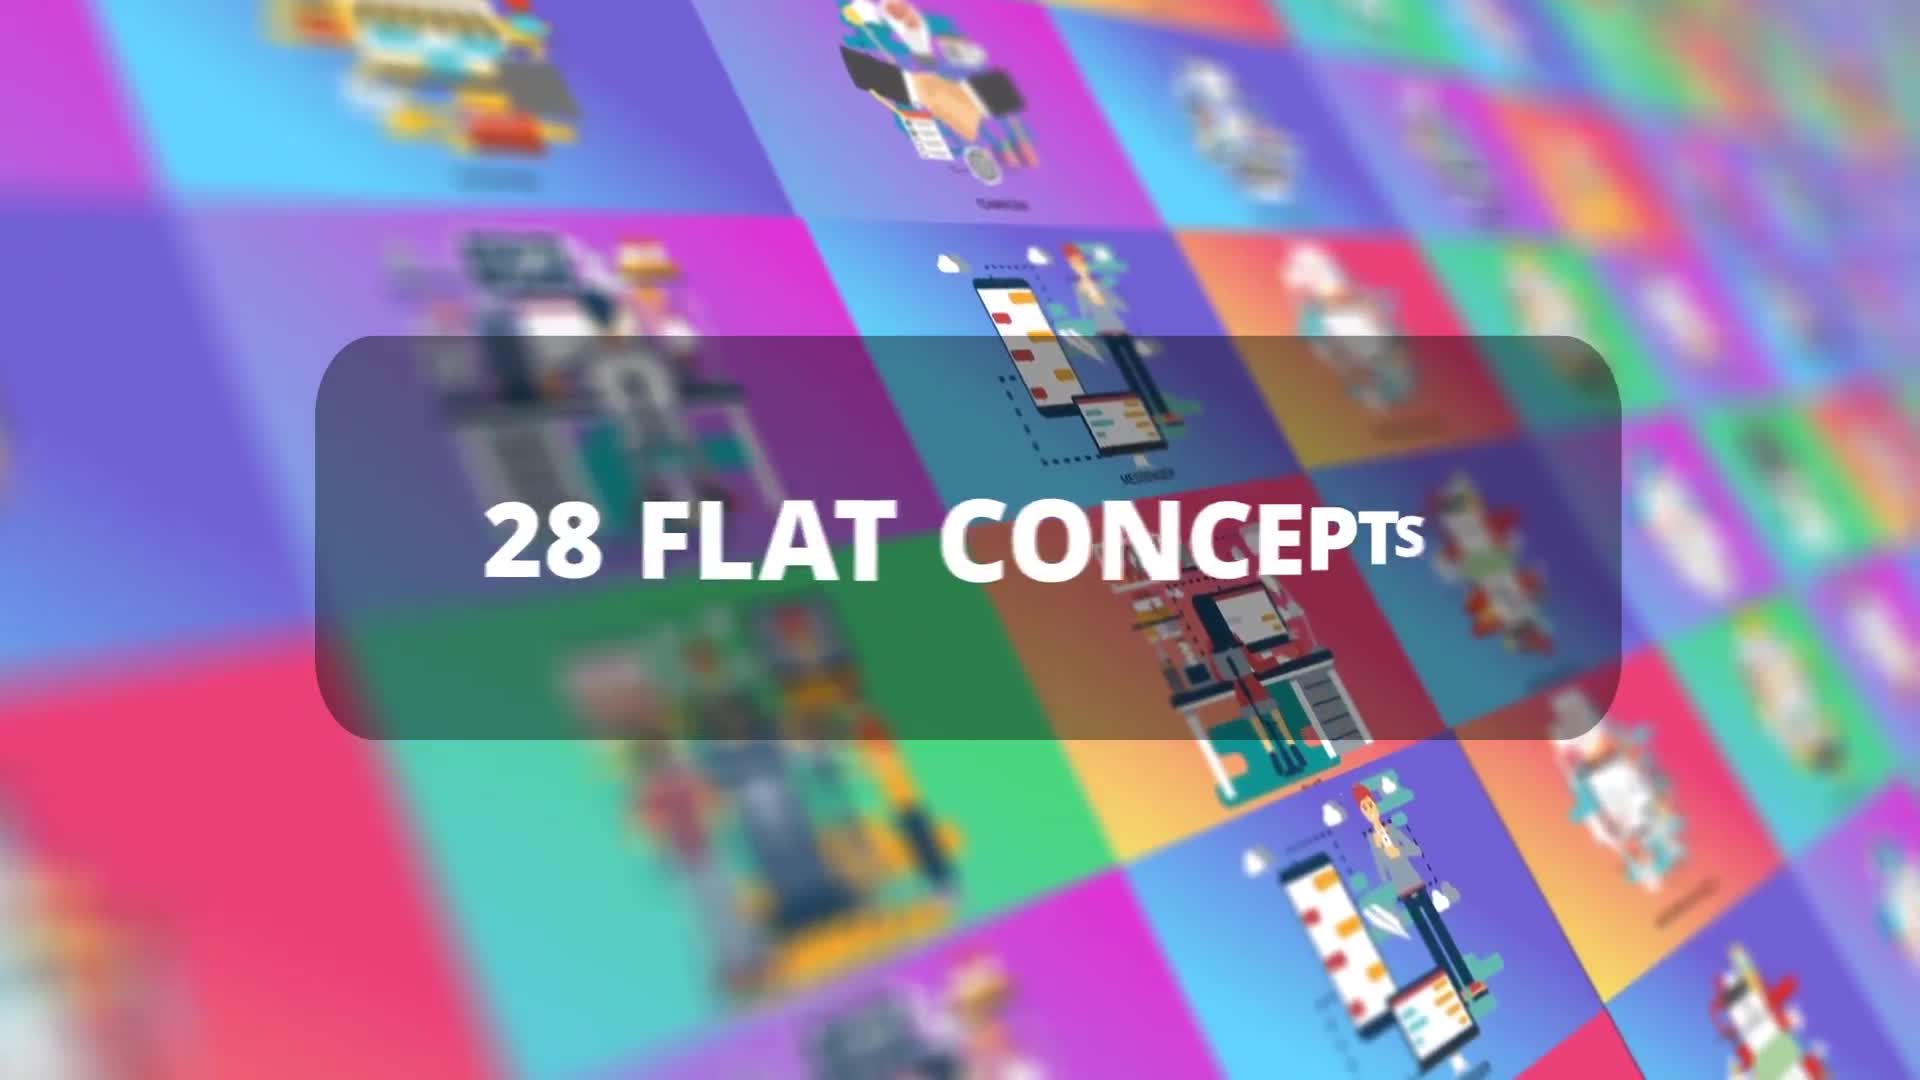 Bundle Business Flat Concepts - Download Videohive 23312153